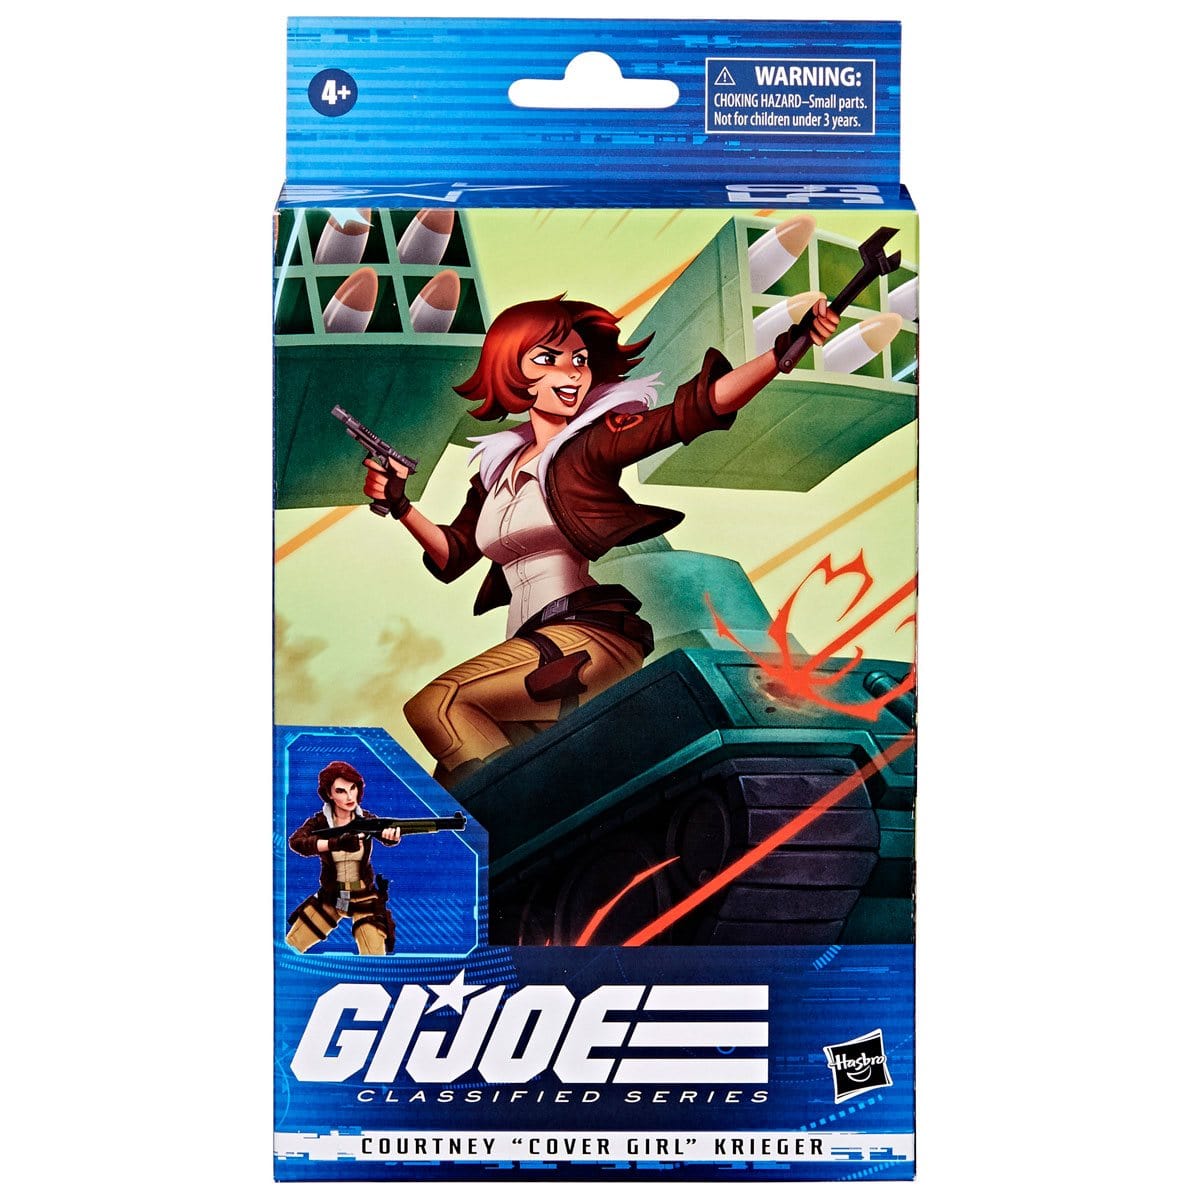 G.I. Joe Classified Series Courtney “Cover Girl” Krieger Action Figure Pop-O-Loco